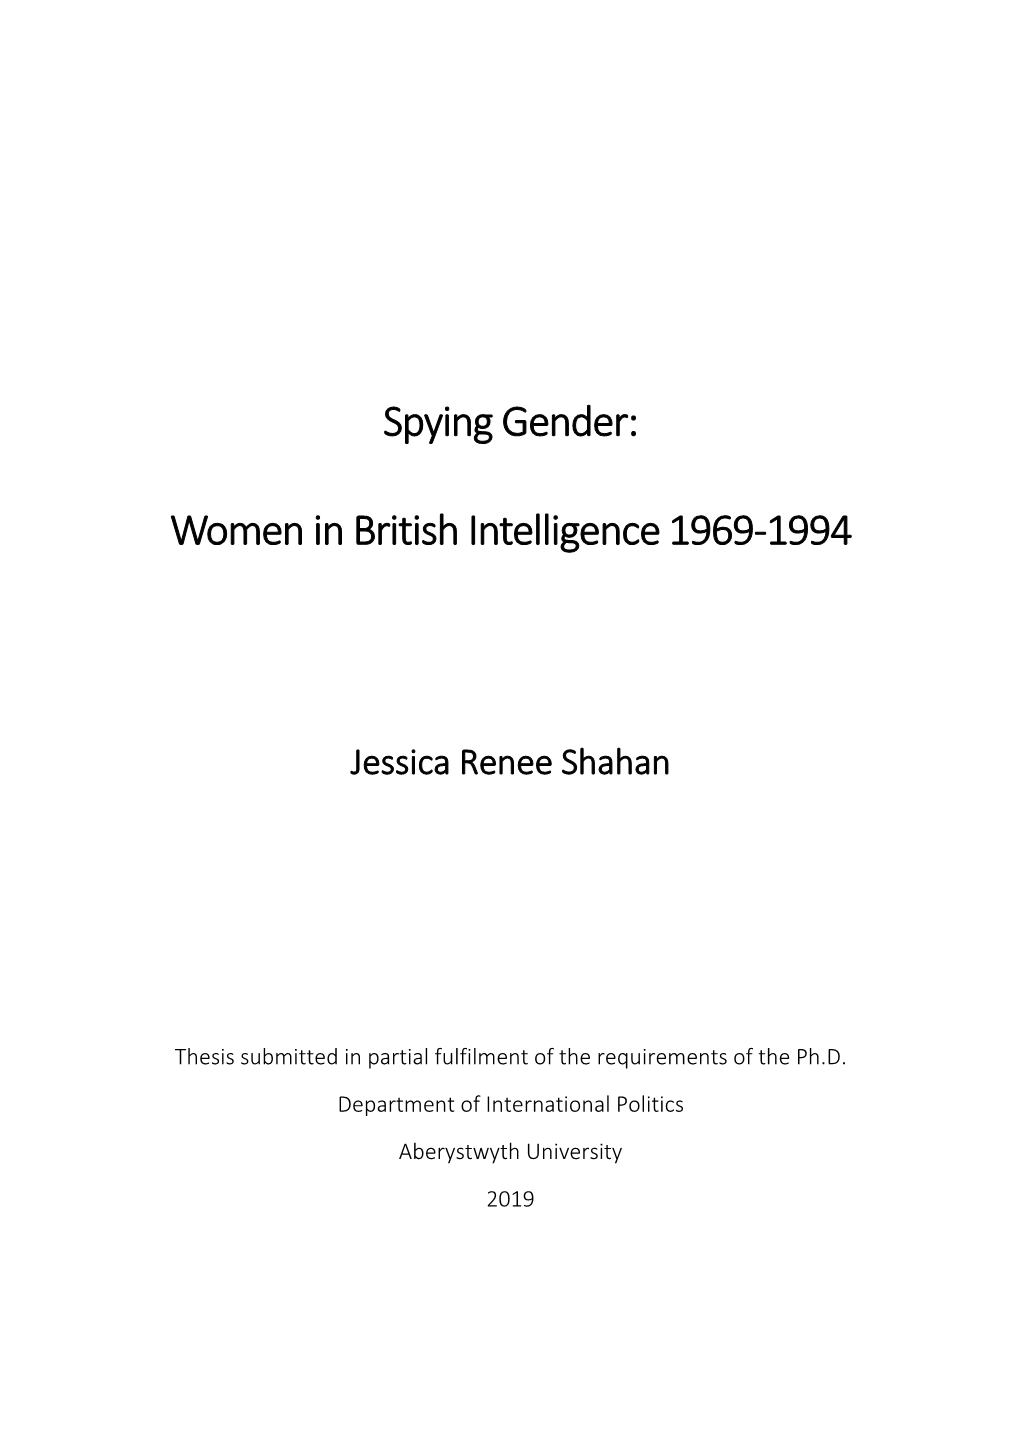 Spying Gender: Women in British Intelligence 1969-1994